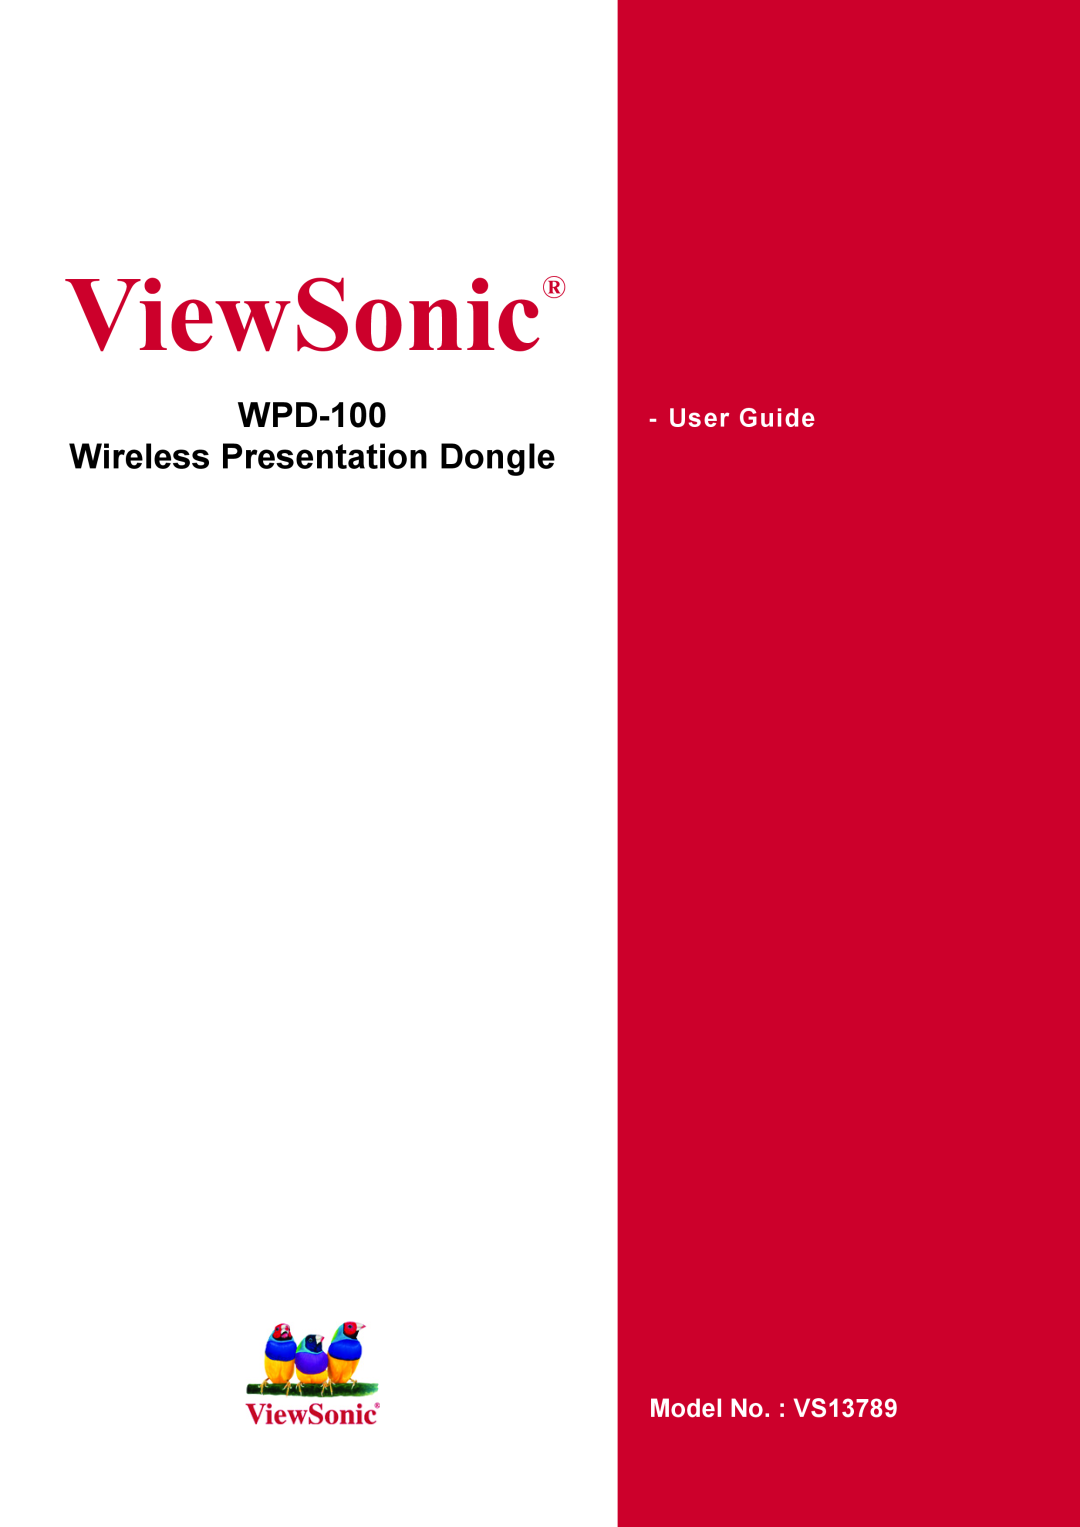 ViewSonic manual ViewSonic, WPD-100 Wireless Presentation Dongle, User Guide, Model No. : VS13789 